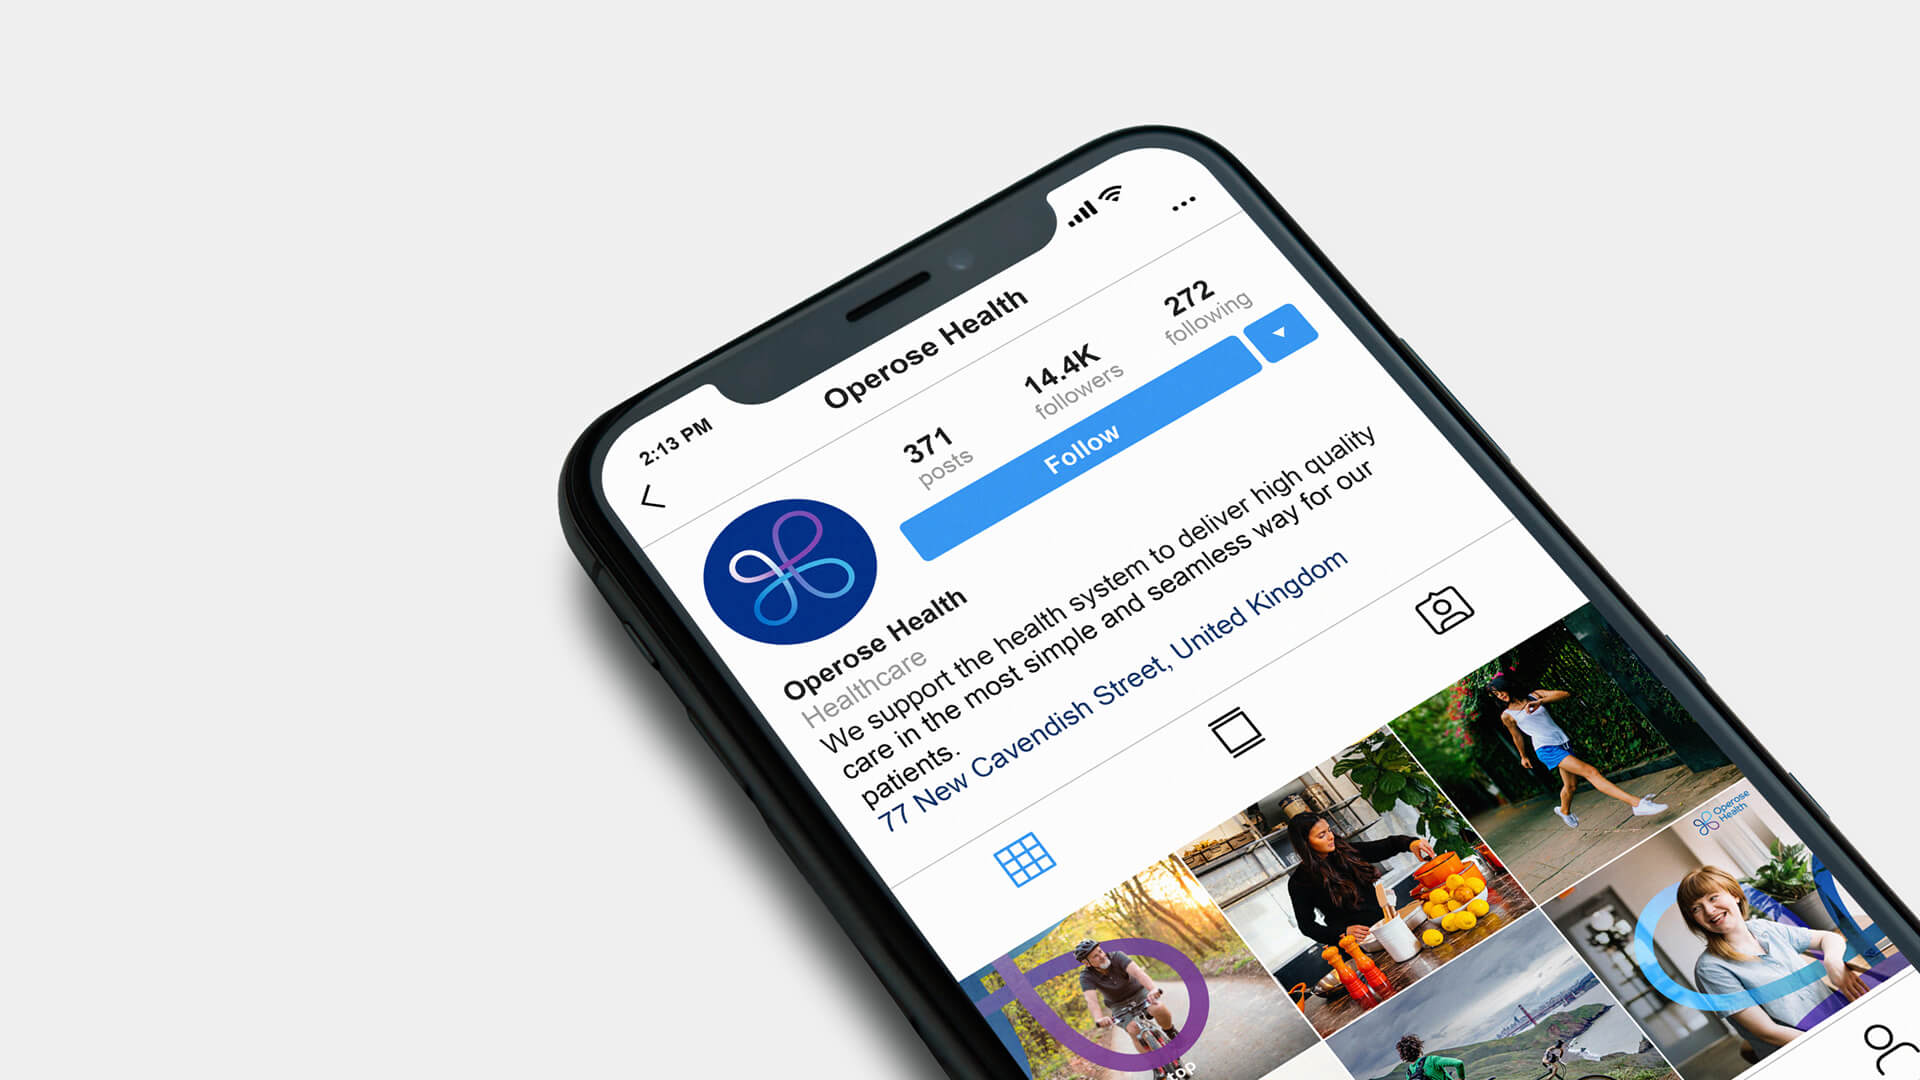 Operose Health - Instagram feed